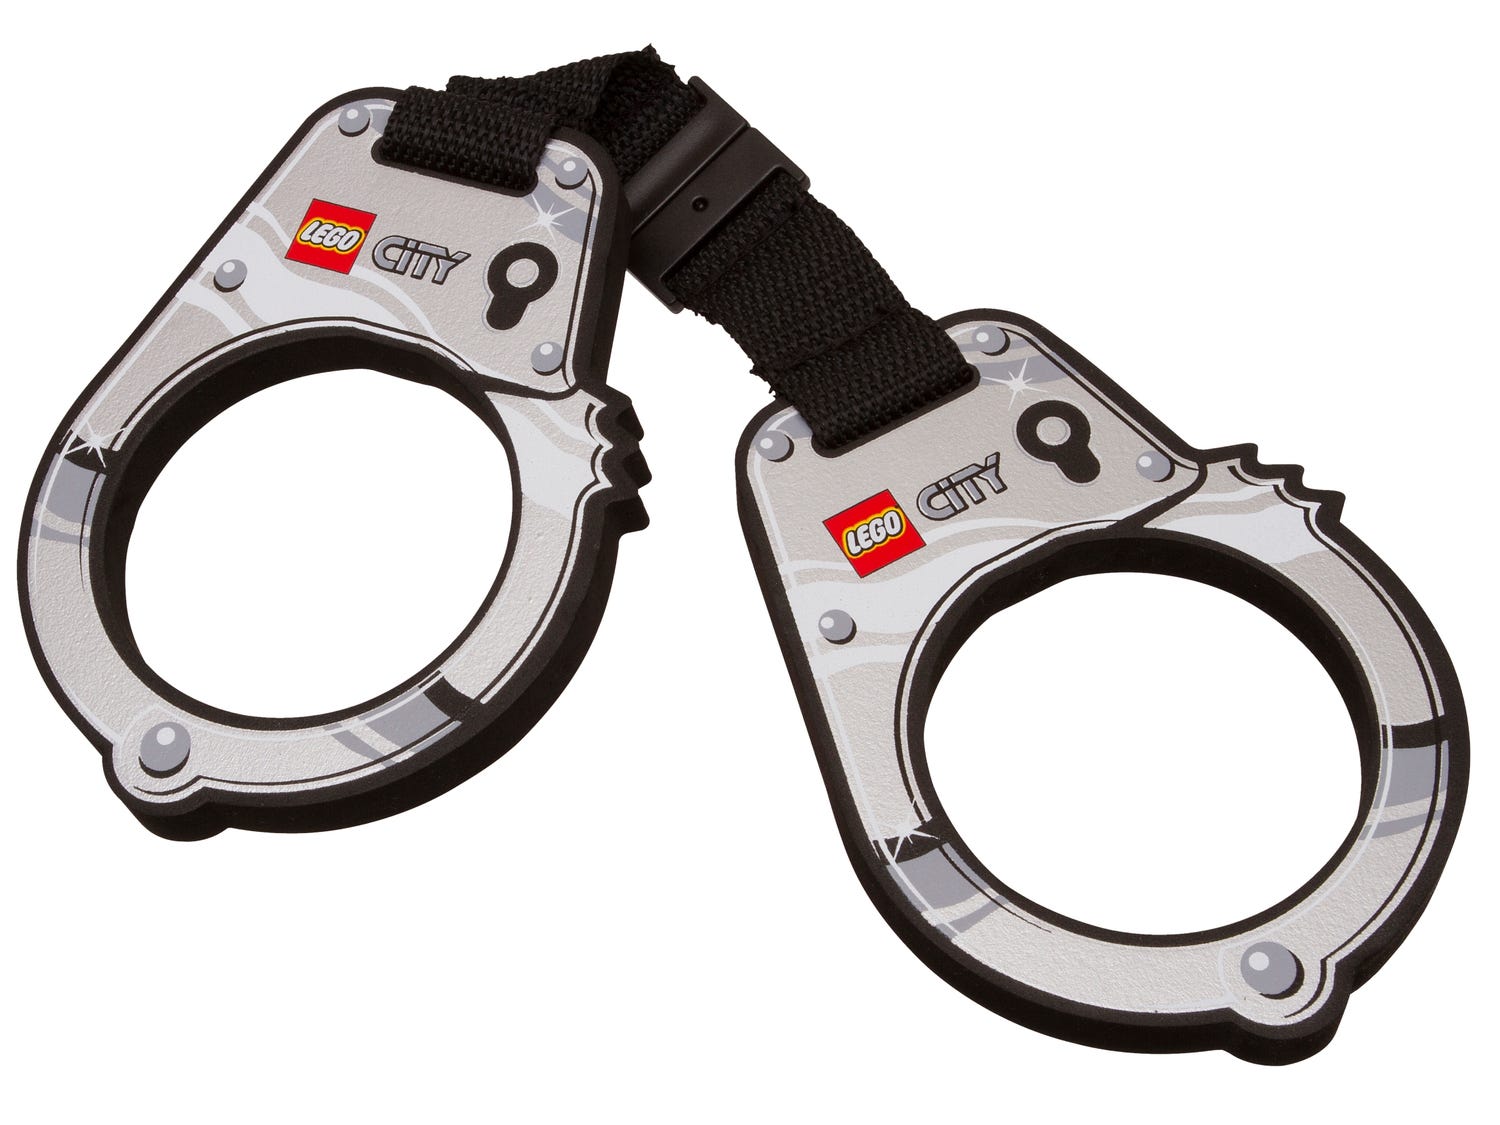 Police Handcuffs 2018